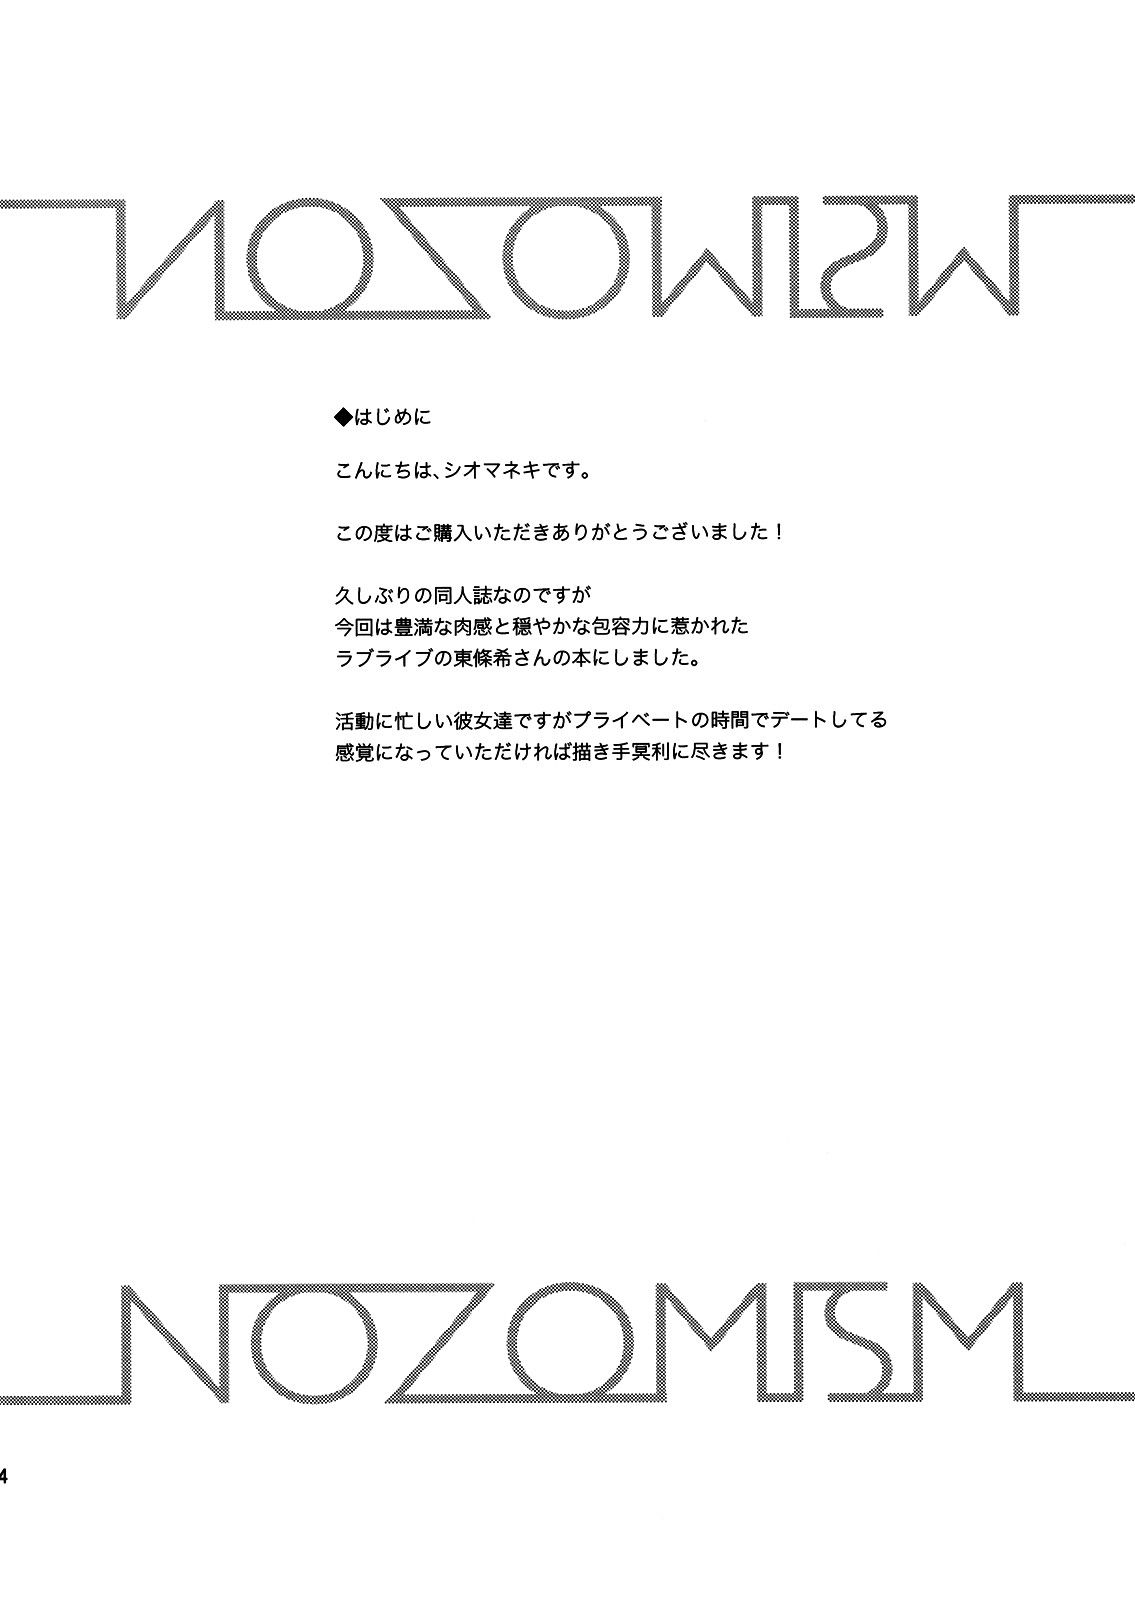 NOZOMISM - 3